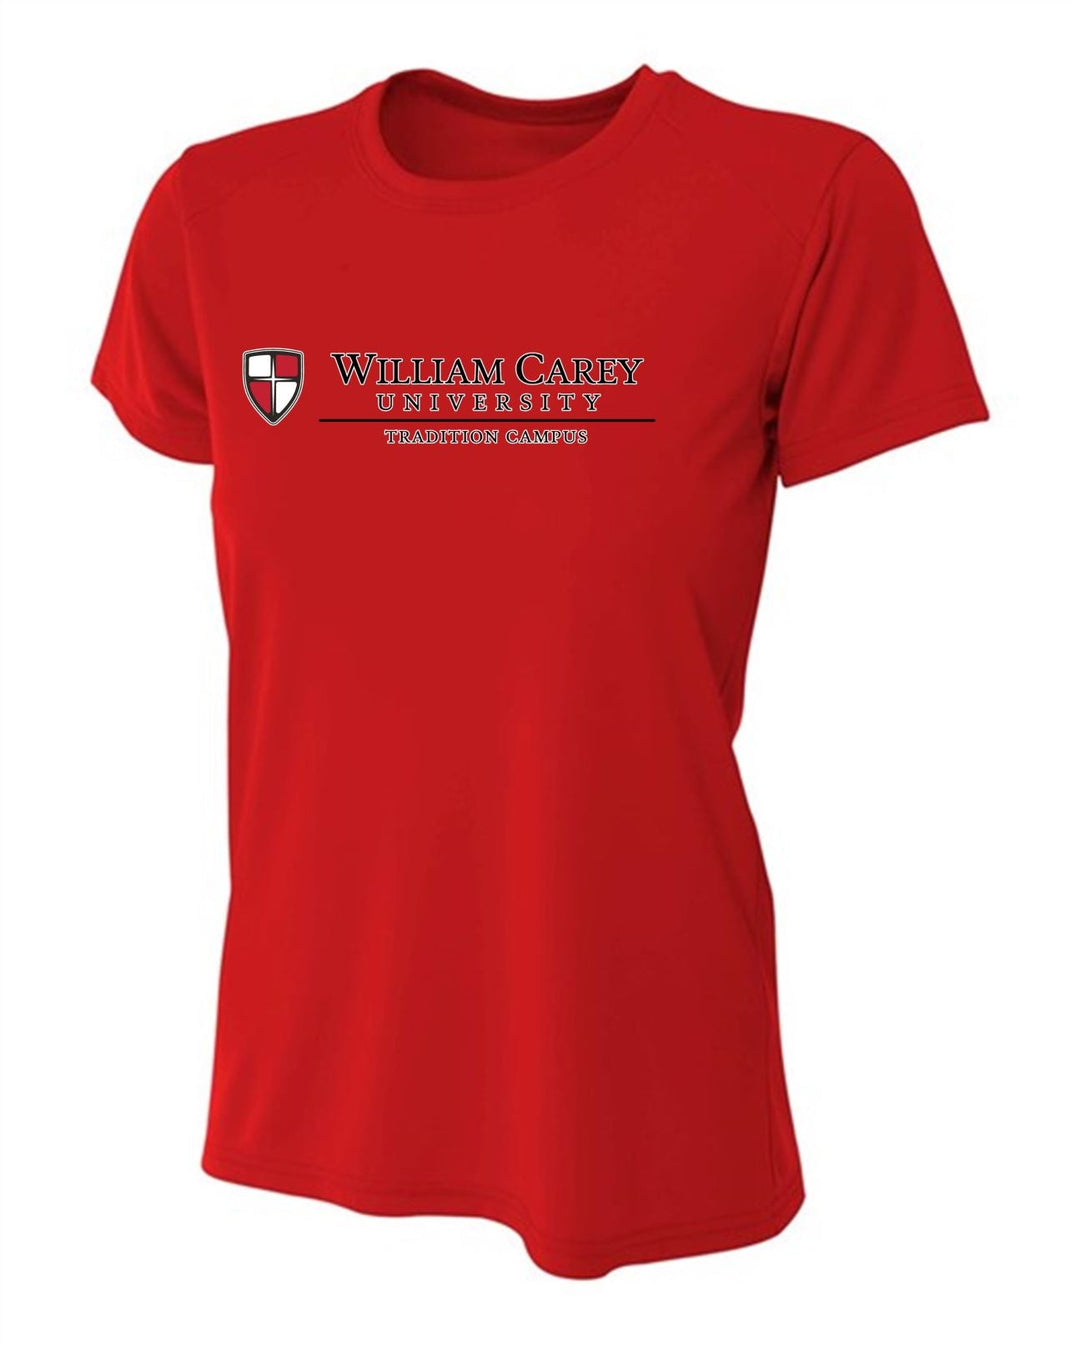 WCU Tradition Campus Women's Short-Sleeve Performance Shirt WCU TC Red Womens Small - Third Coast Soccer